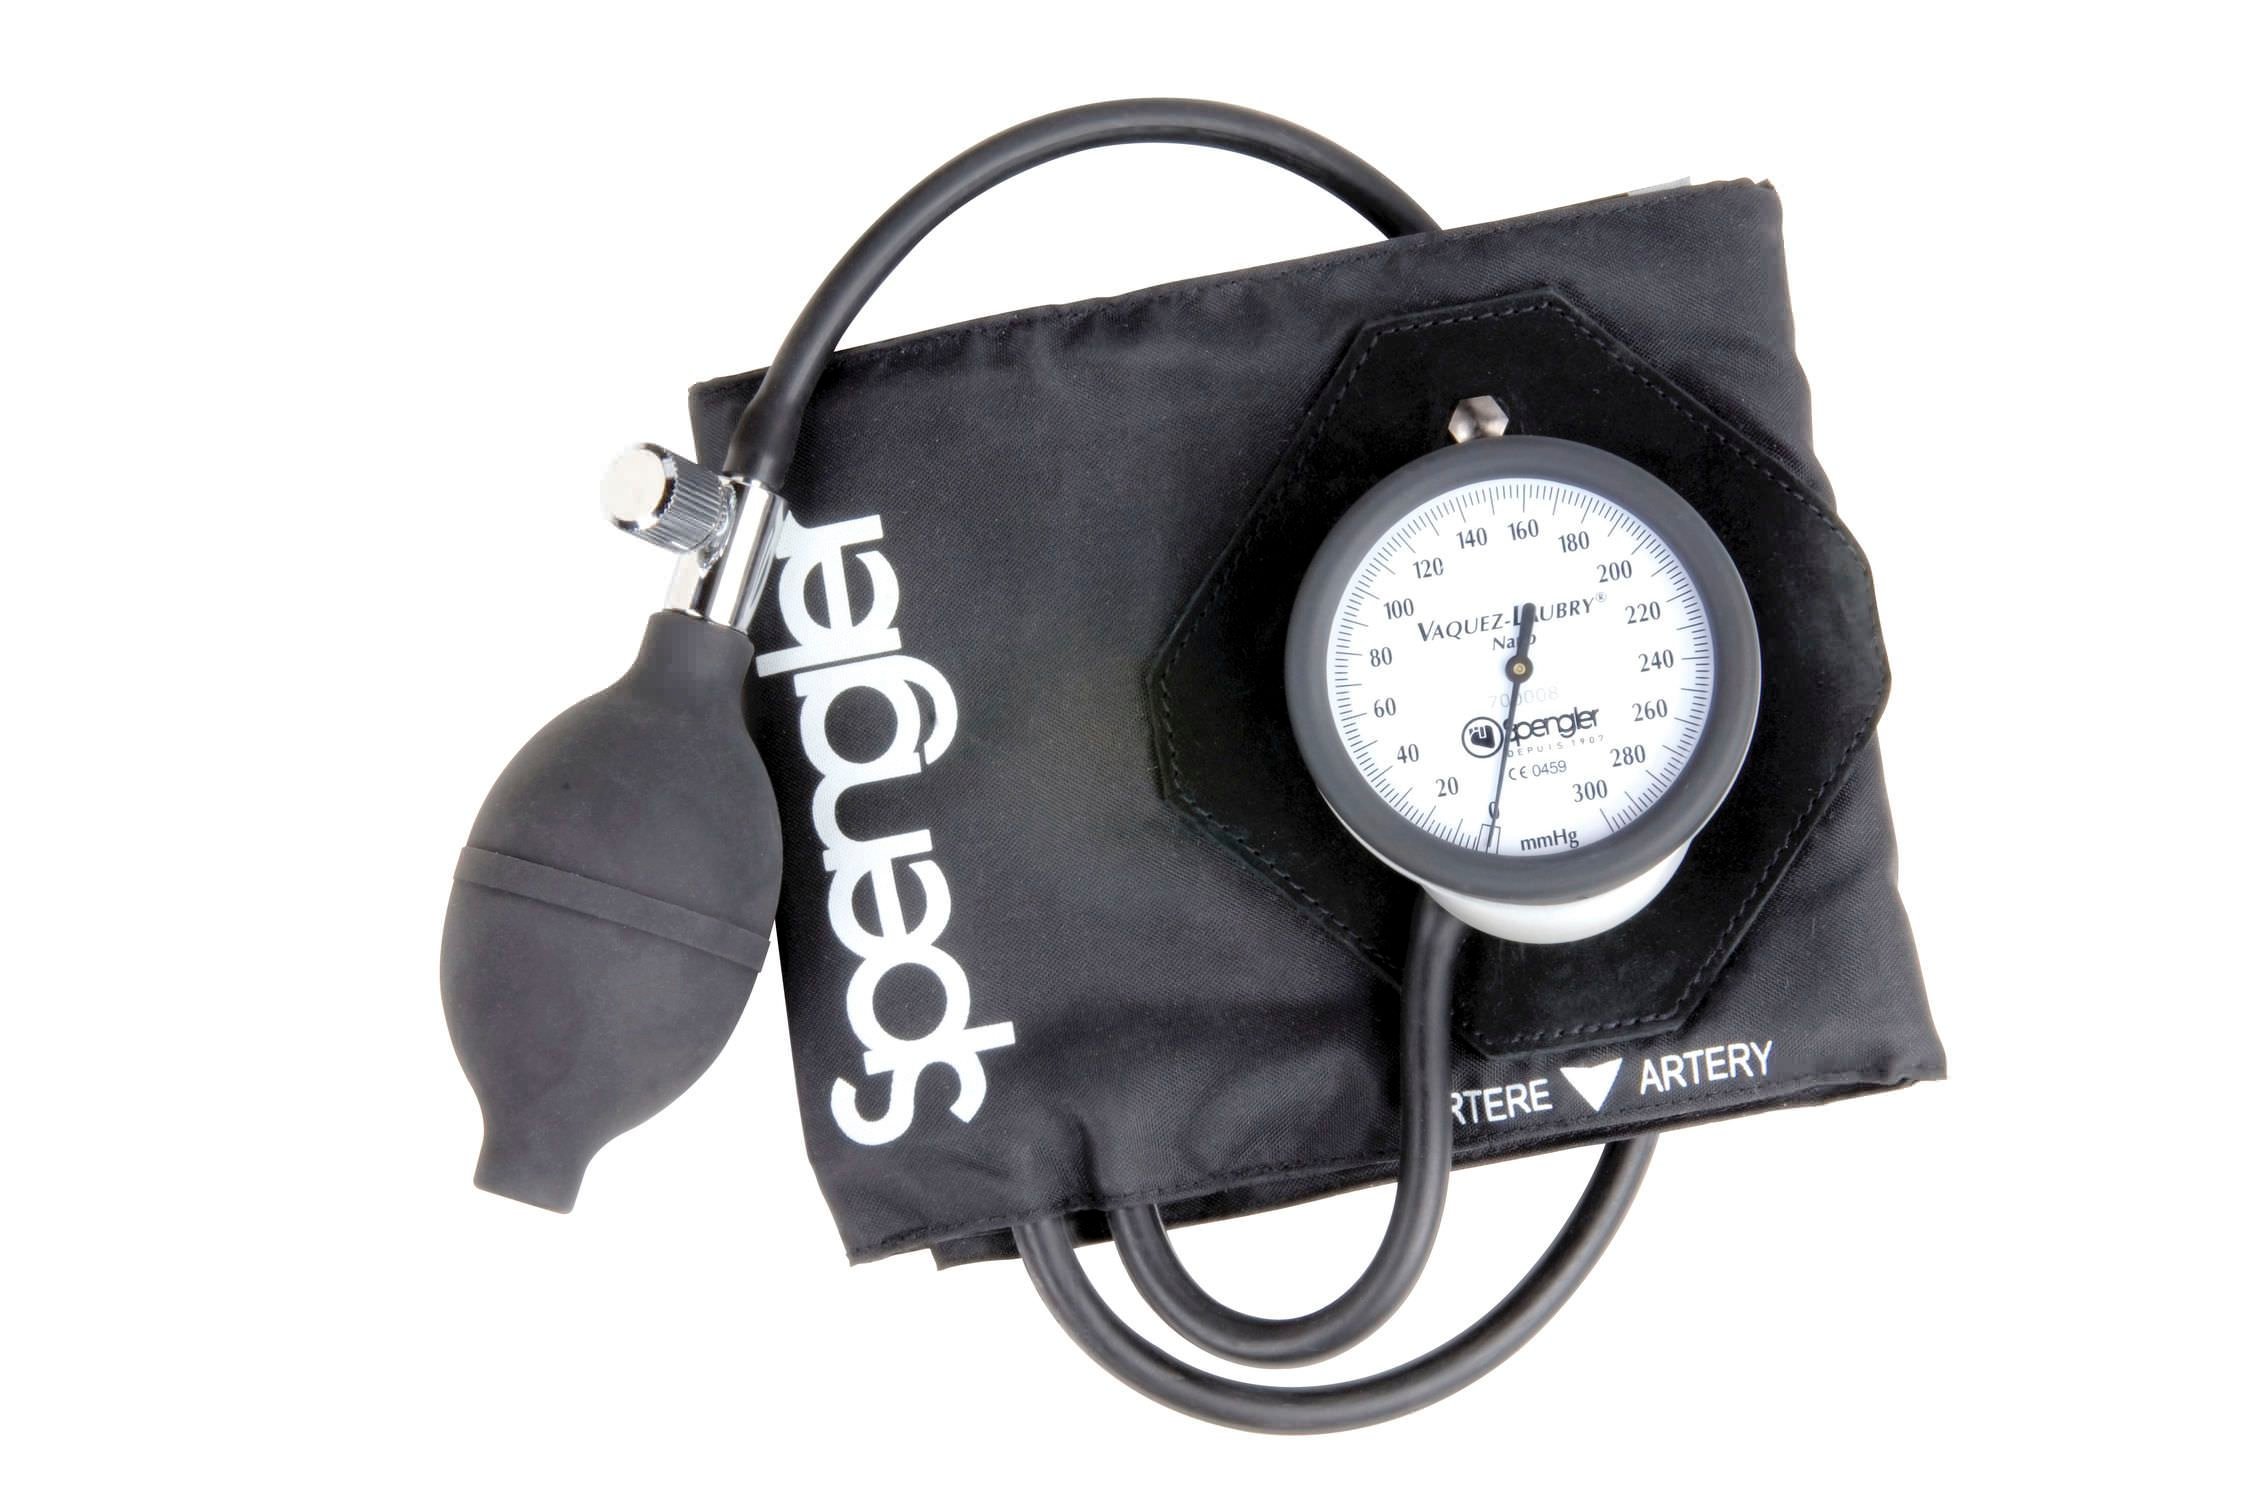 Cuff-mounted sphygmomanometer 0 - 300 mmHg | Vaquez-Laubry® Nano Spengler SAS